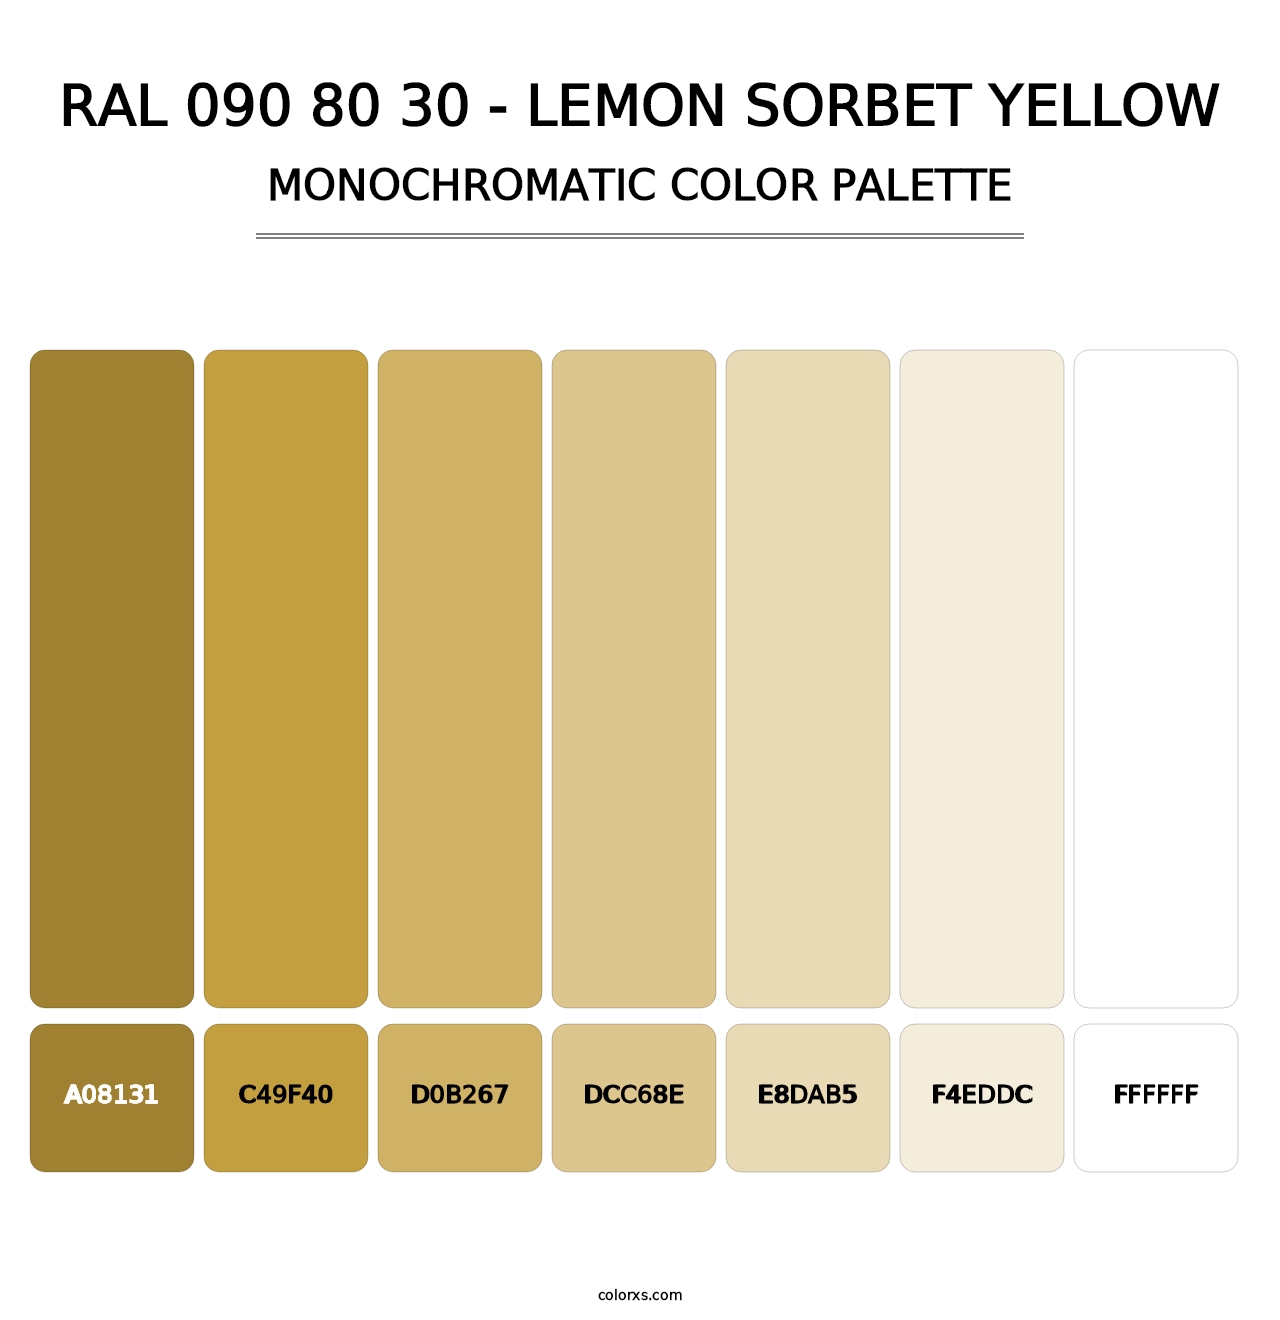 RAL 090 80 30 - Lemon Sorbet Yellow - Monochromatic Color Palette